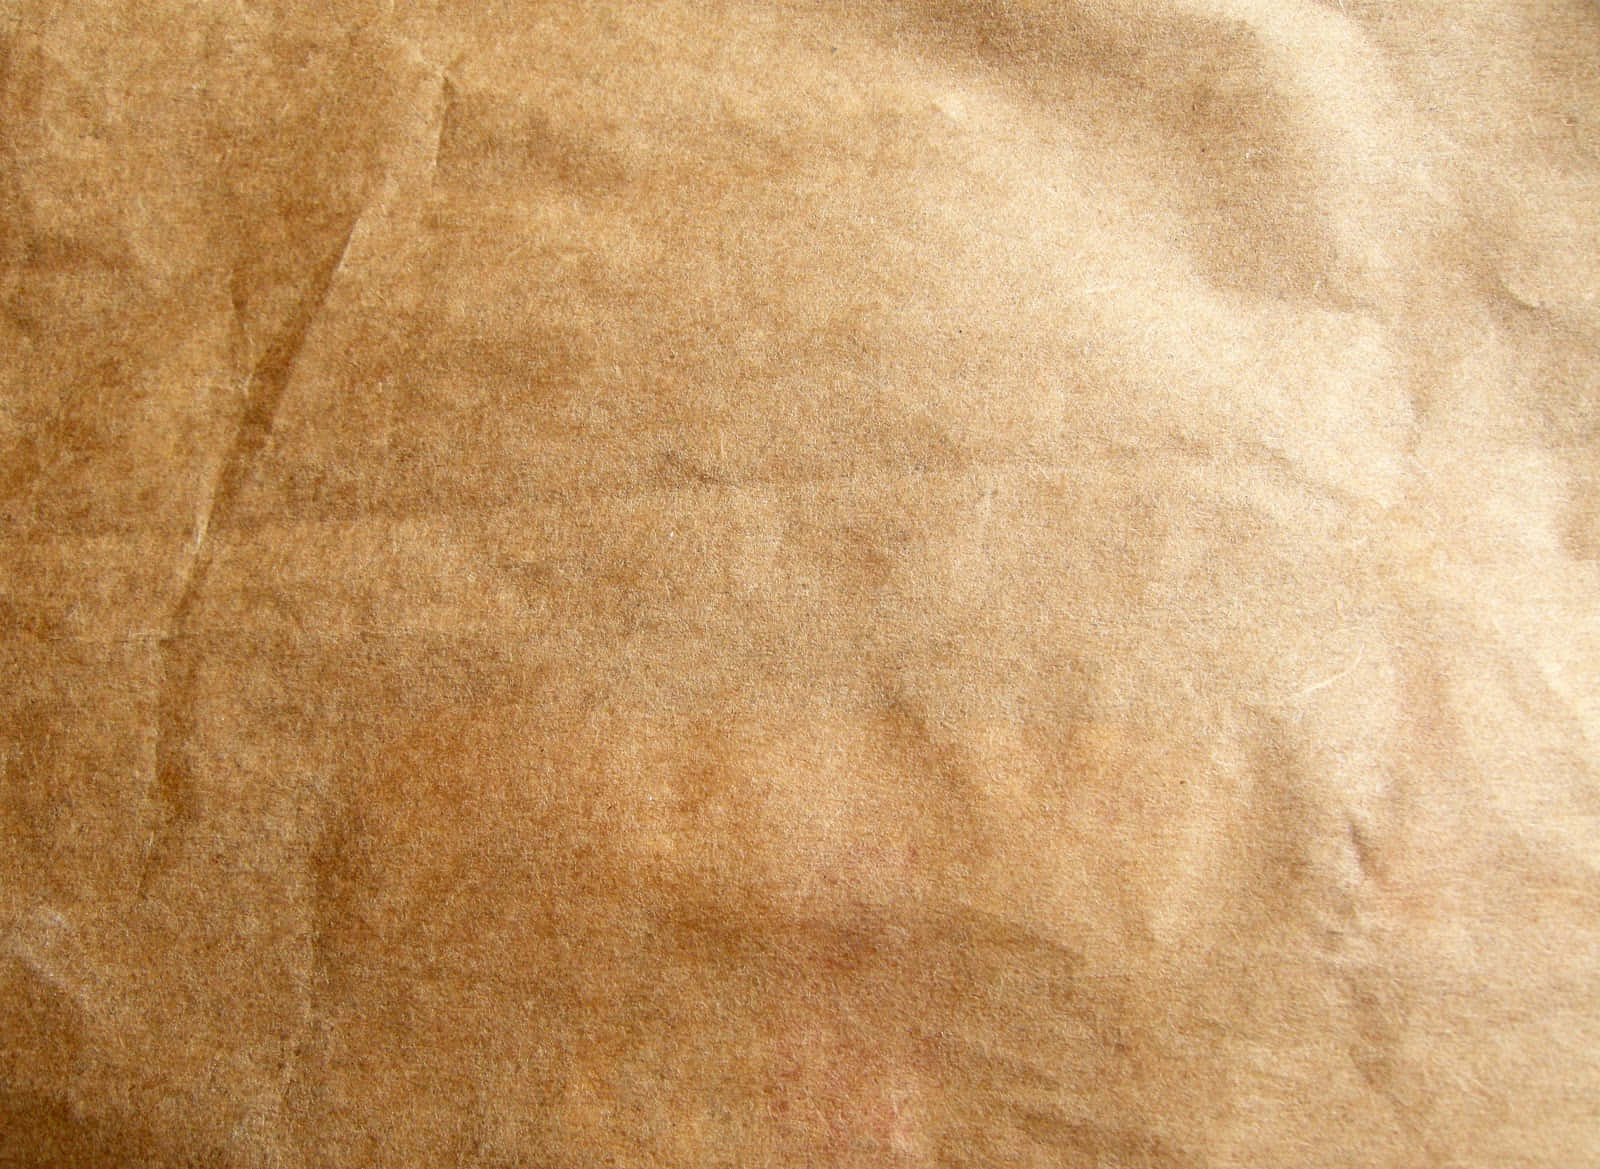 Textured Brown Paper Background